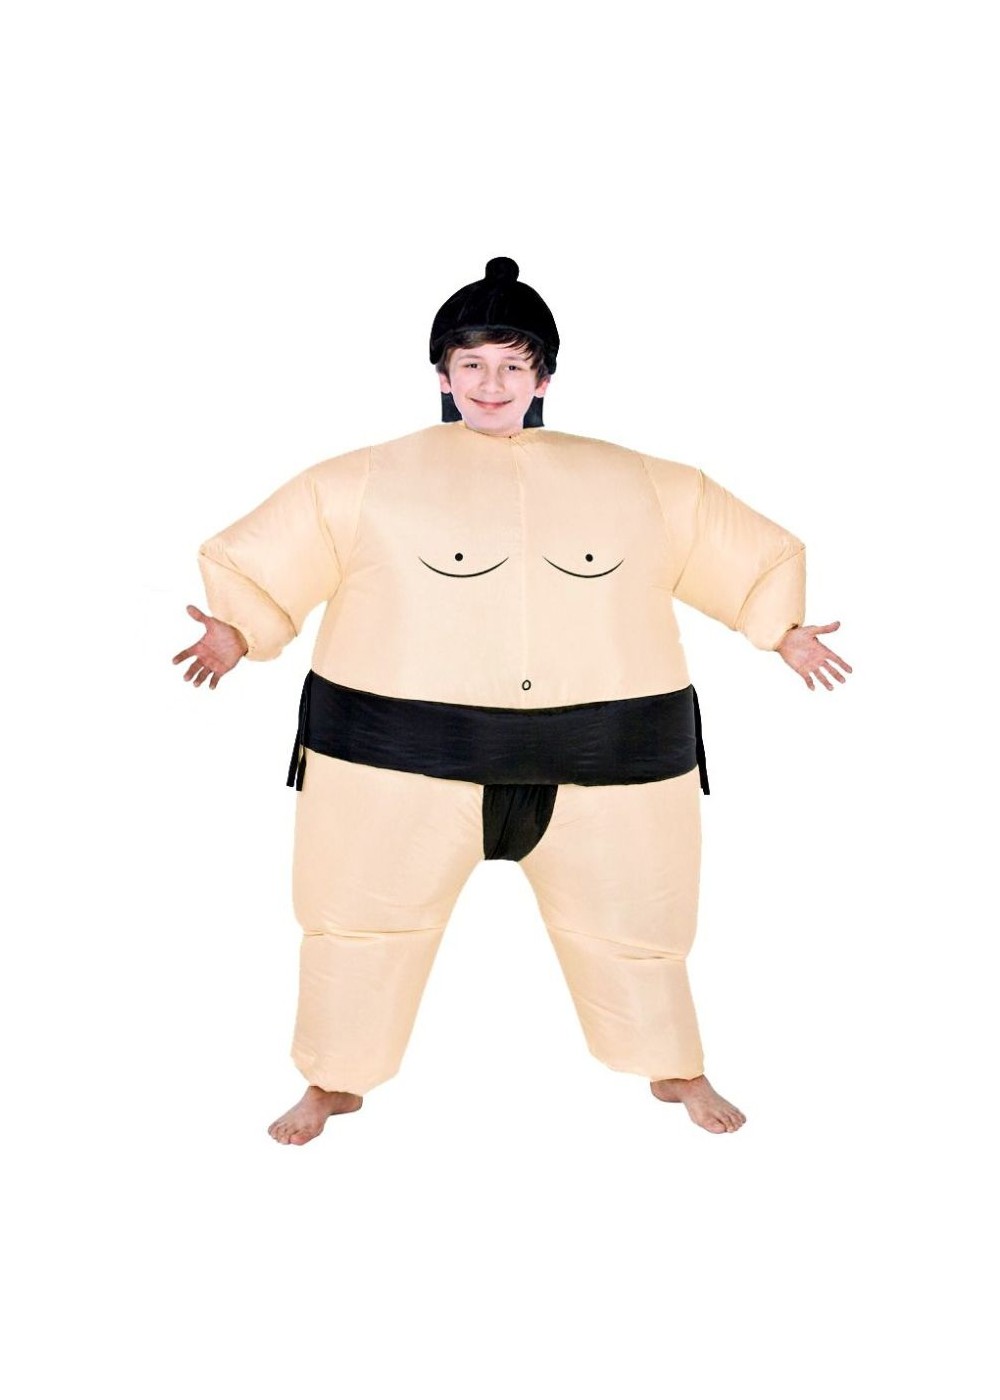  Boys Inflatable Sumo Wrestler Costume